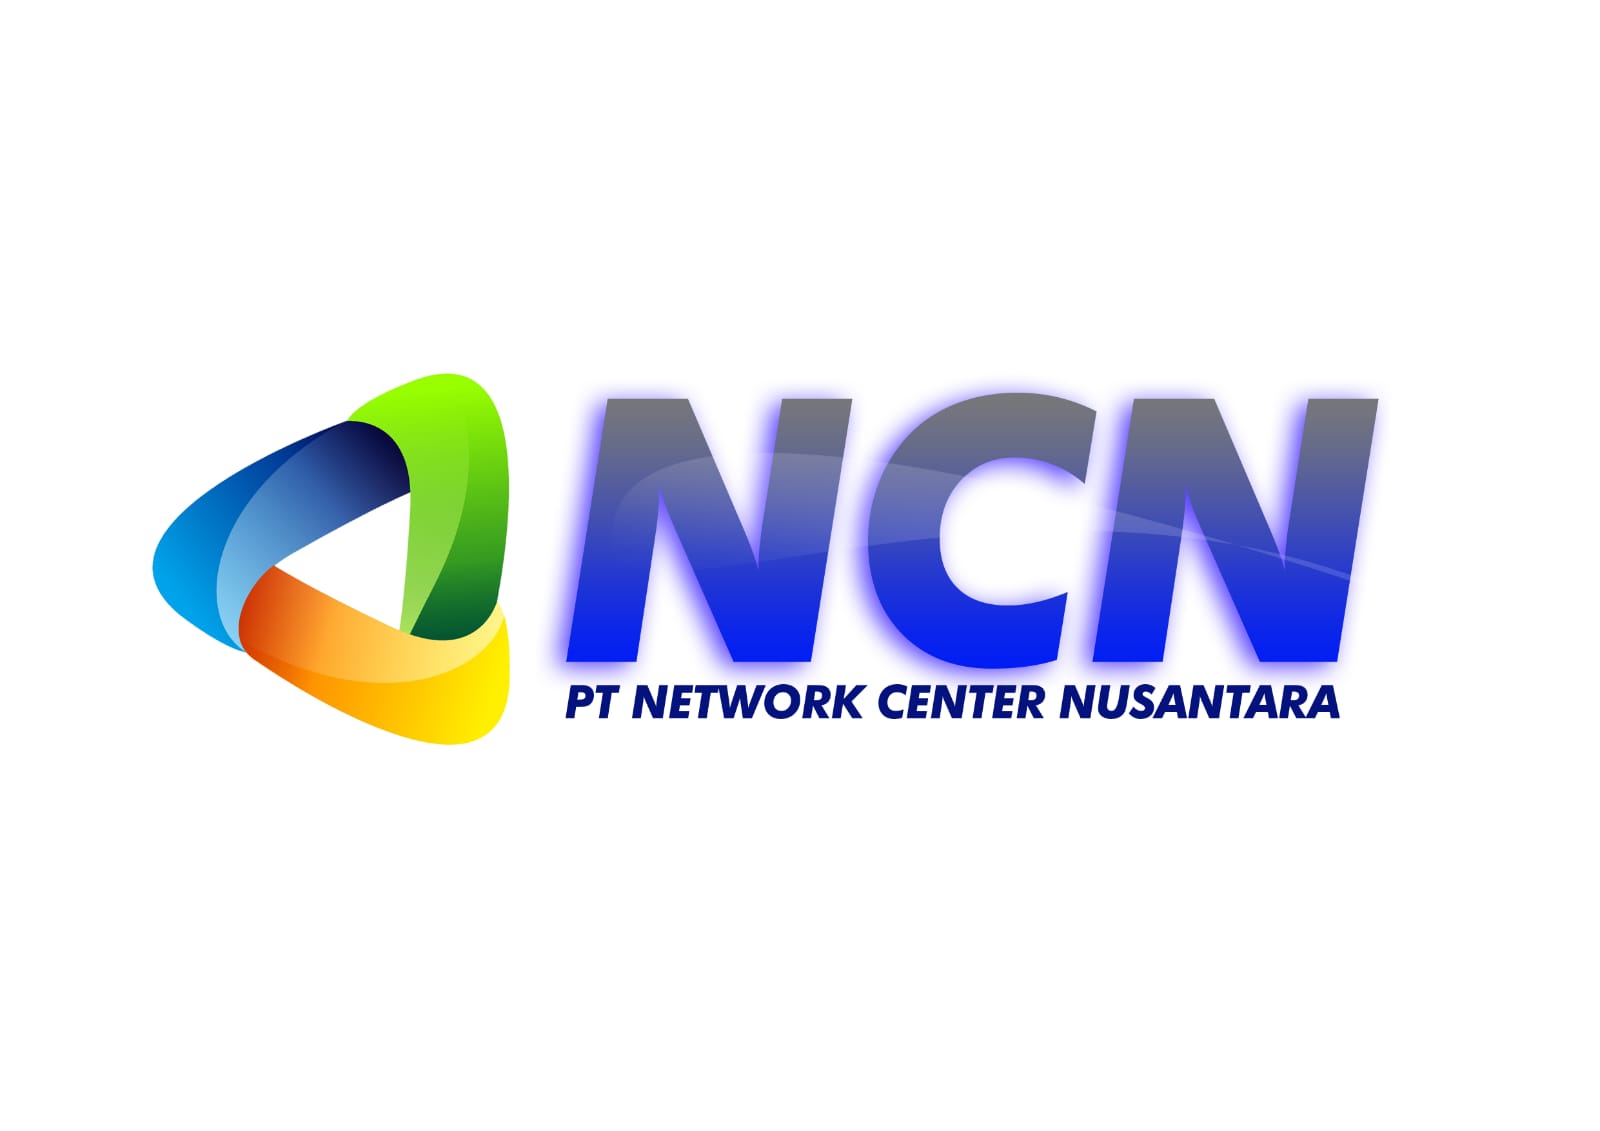 PT NETWORK CENTER NUSANTARA